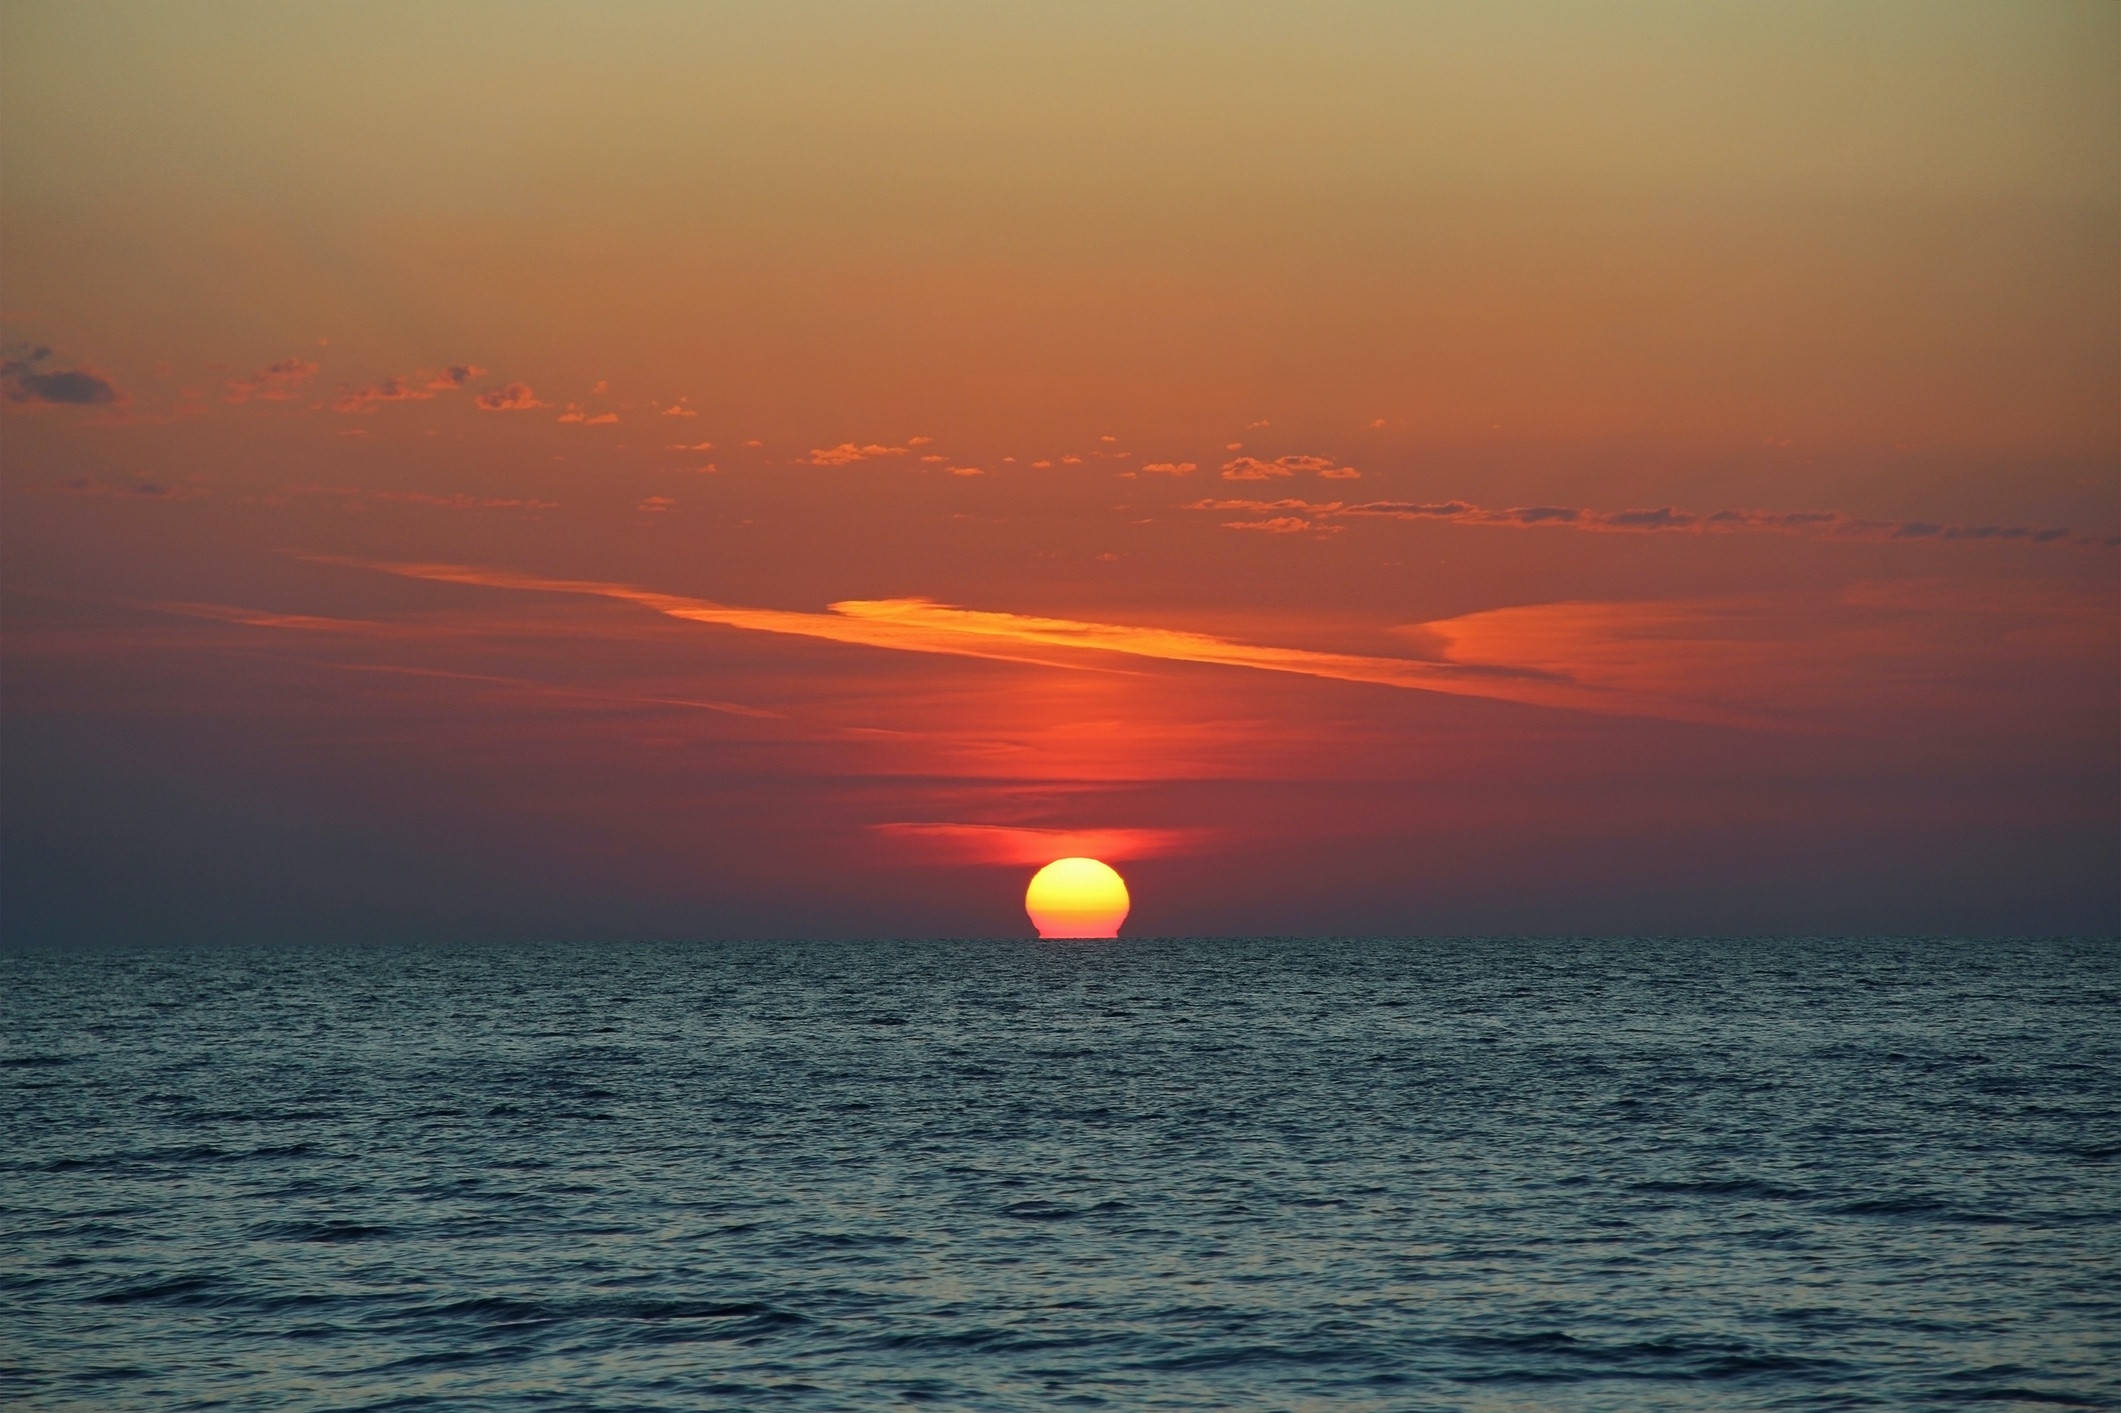 the sun sinks behind the horizon of the Black Sea